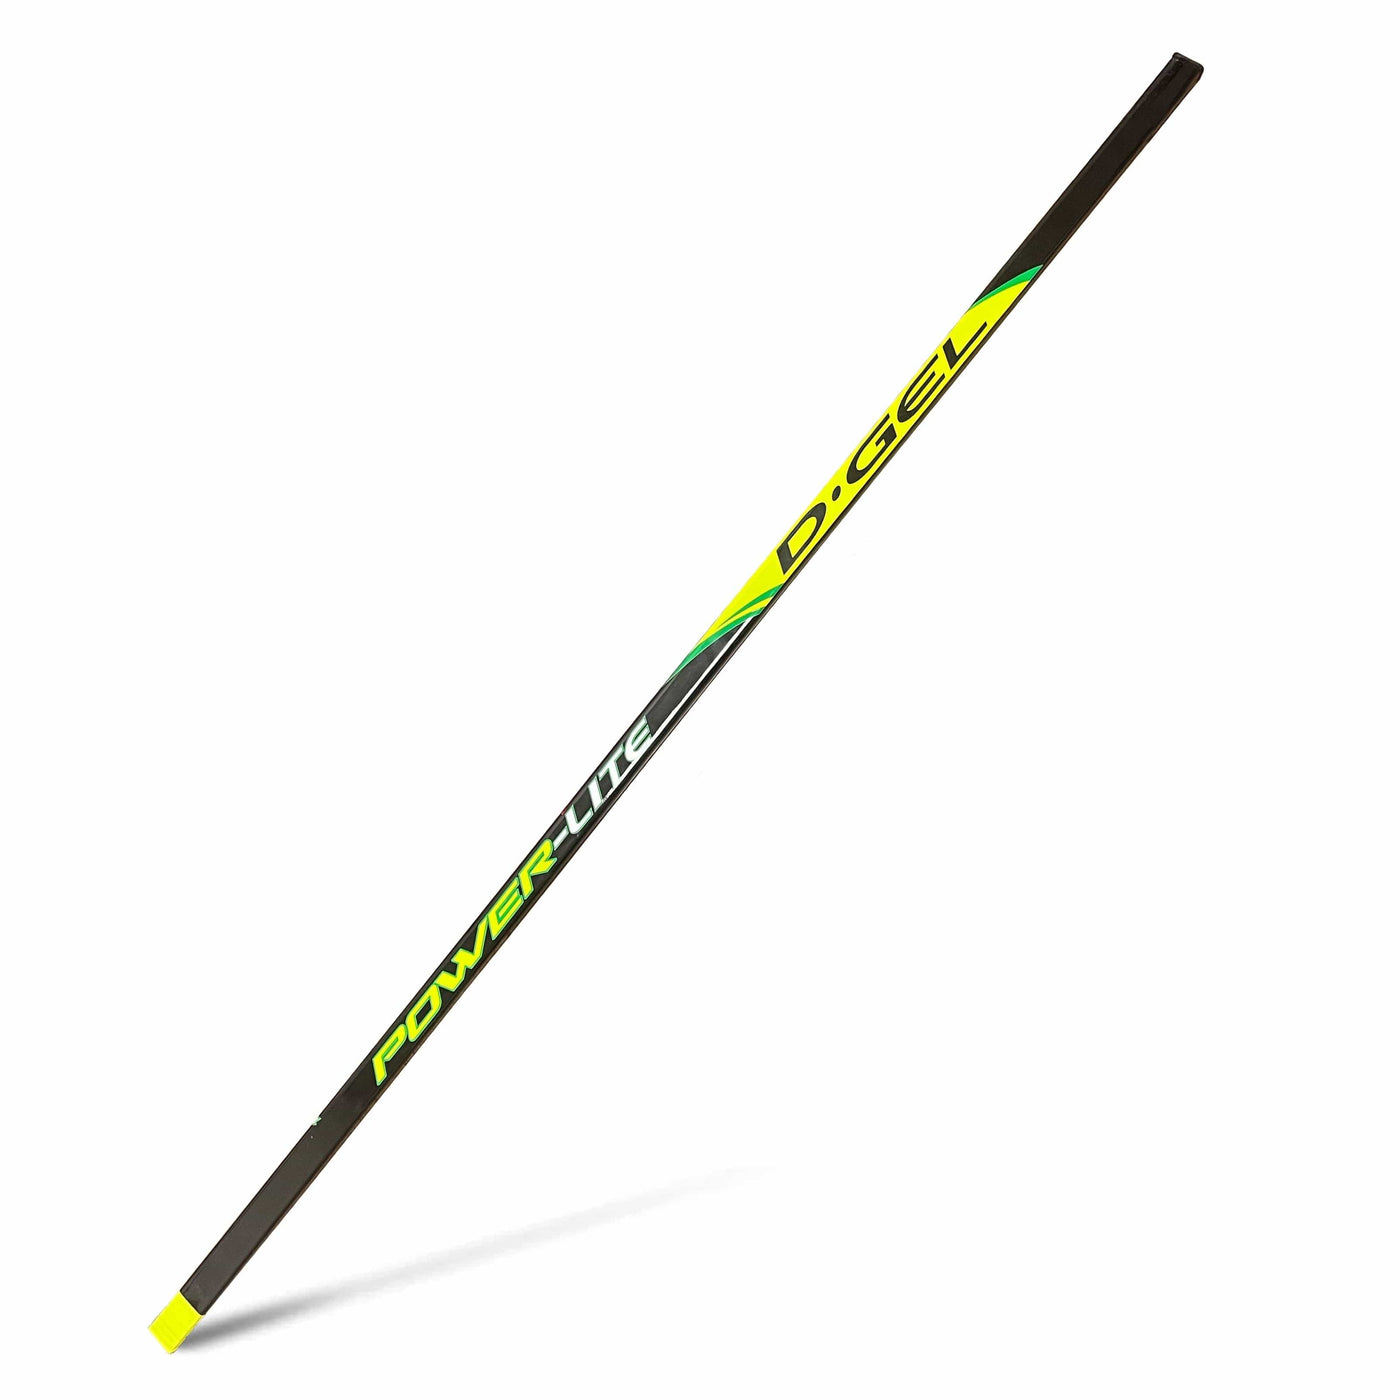 D-Gel Power-Lite Senior Composite Ringette Stick - TheHockeyShop.com